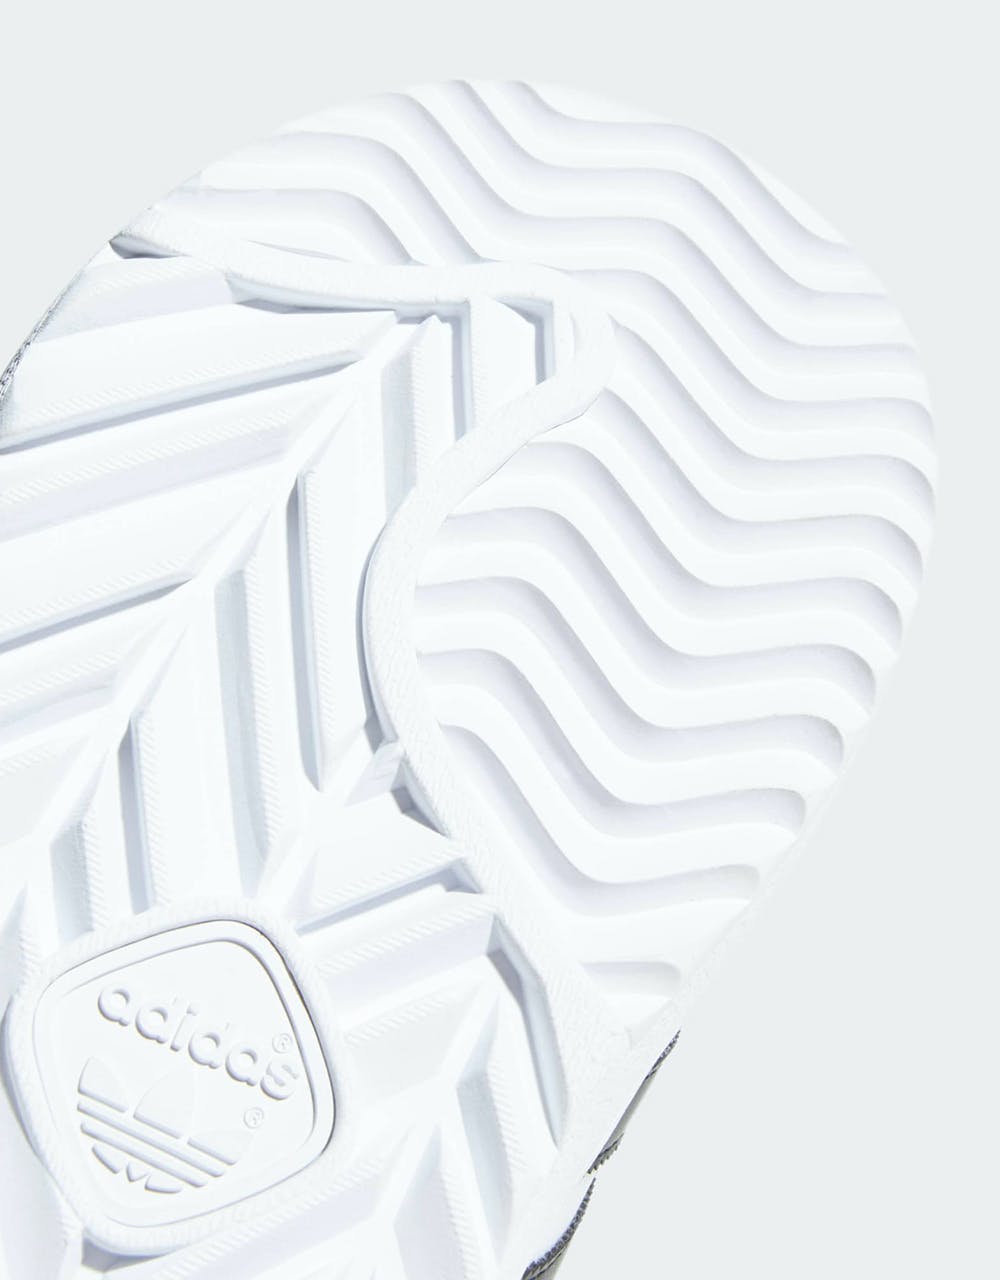 Adidas Superstar ADV 2019 Snowboard Boots - White/Core Black/White